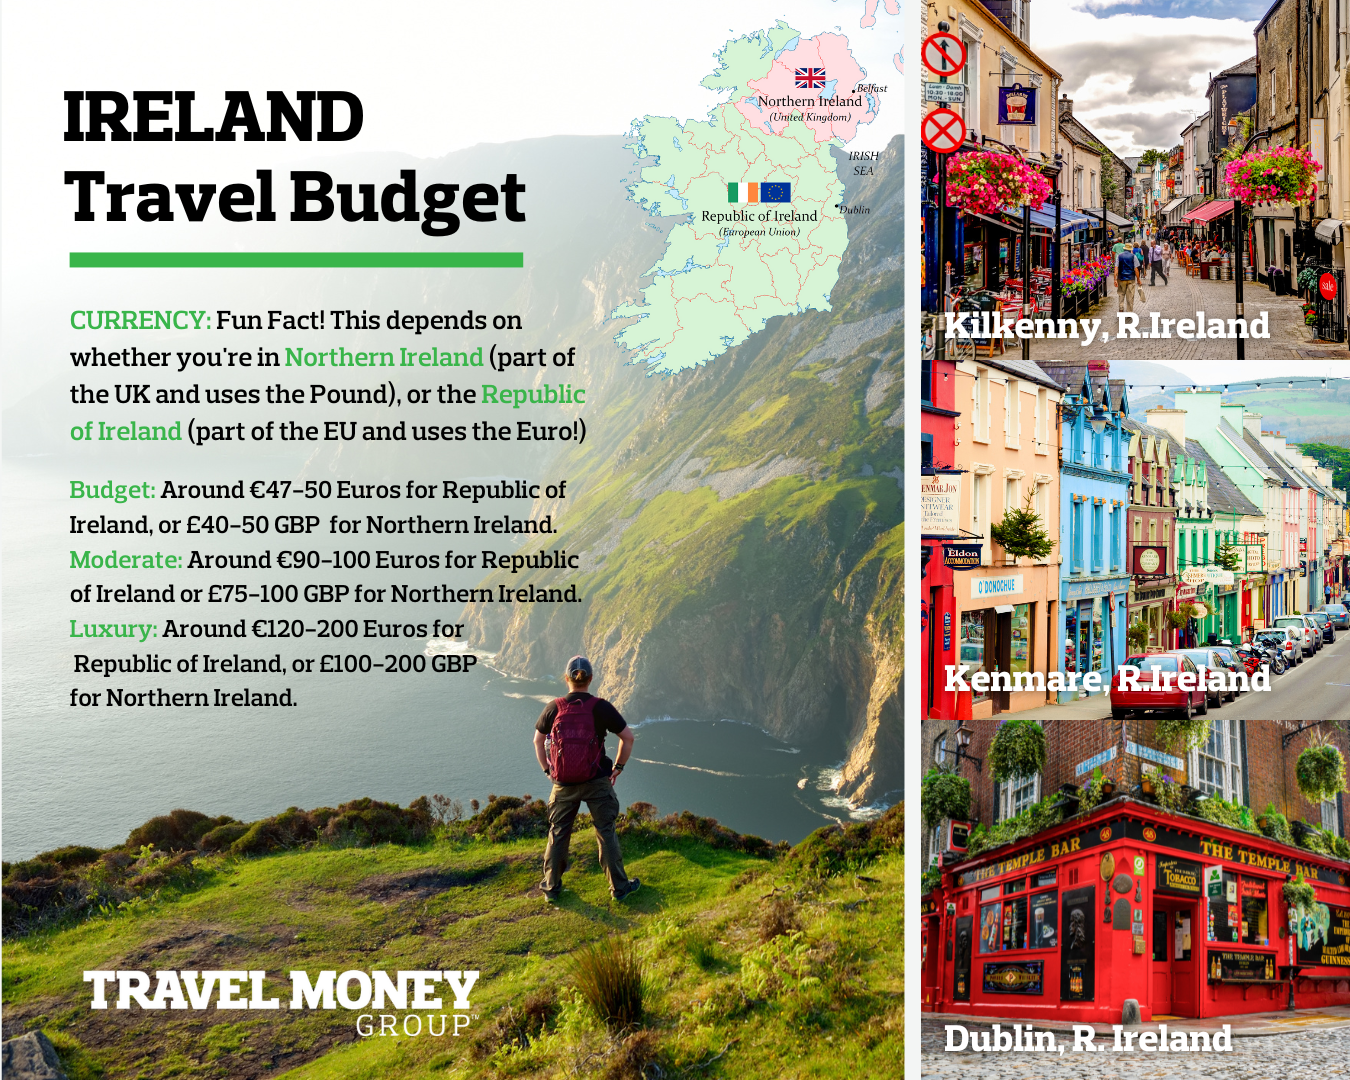 Ireland Travel Budget Infographic